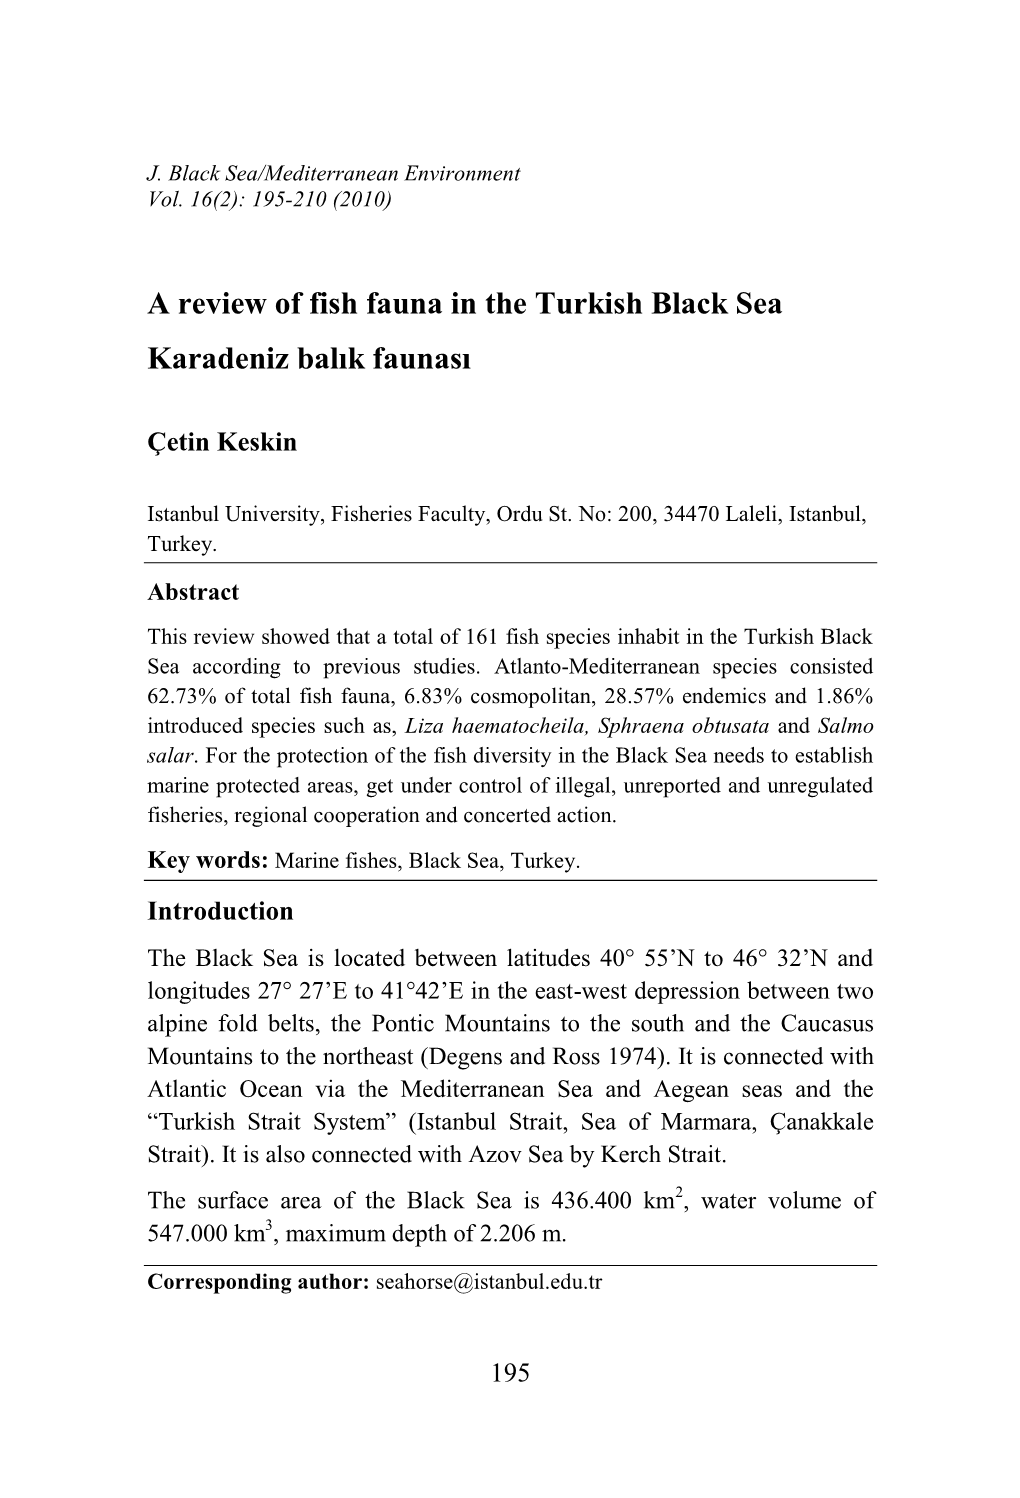 A Review of Fish Fauna in the Turkish Black Sea Karadeniz Balık Faunası